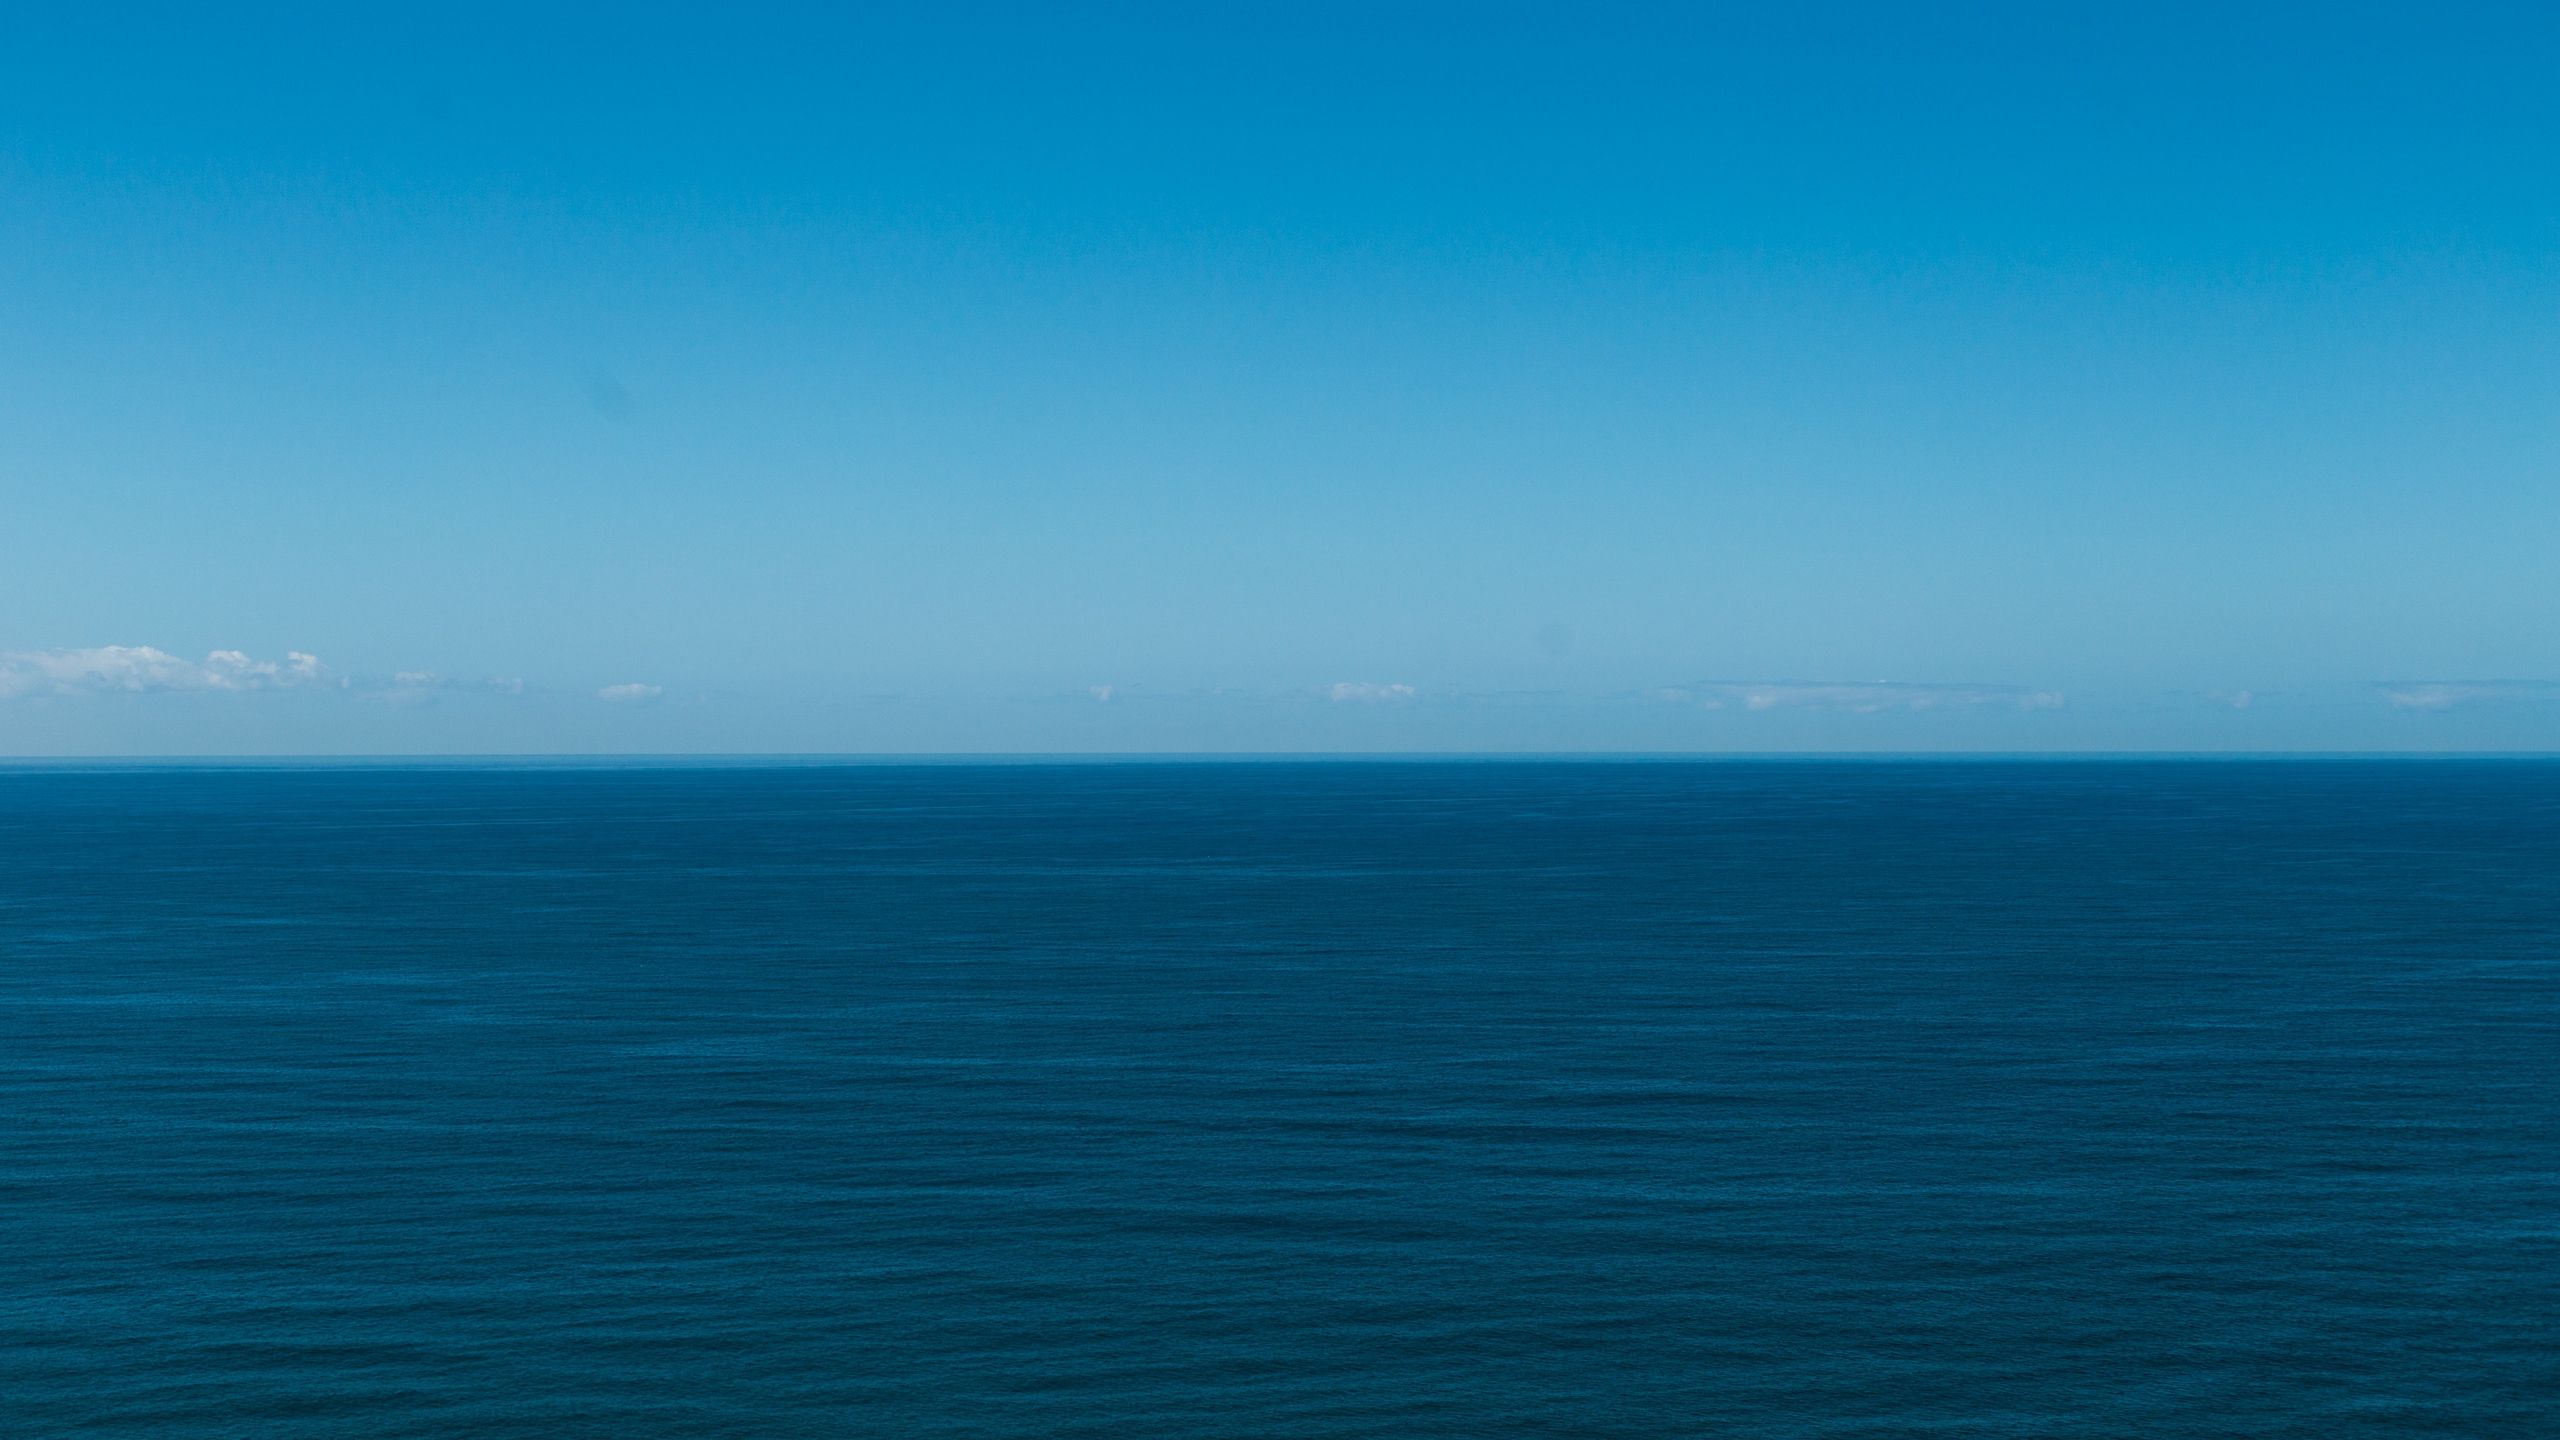 Download wallpaper 2560x1440 sea, horizon, minimalism, sky